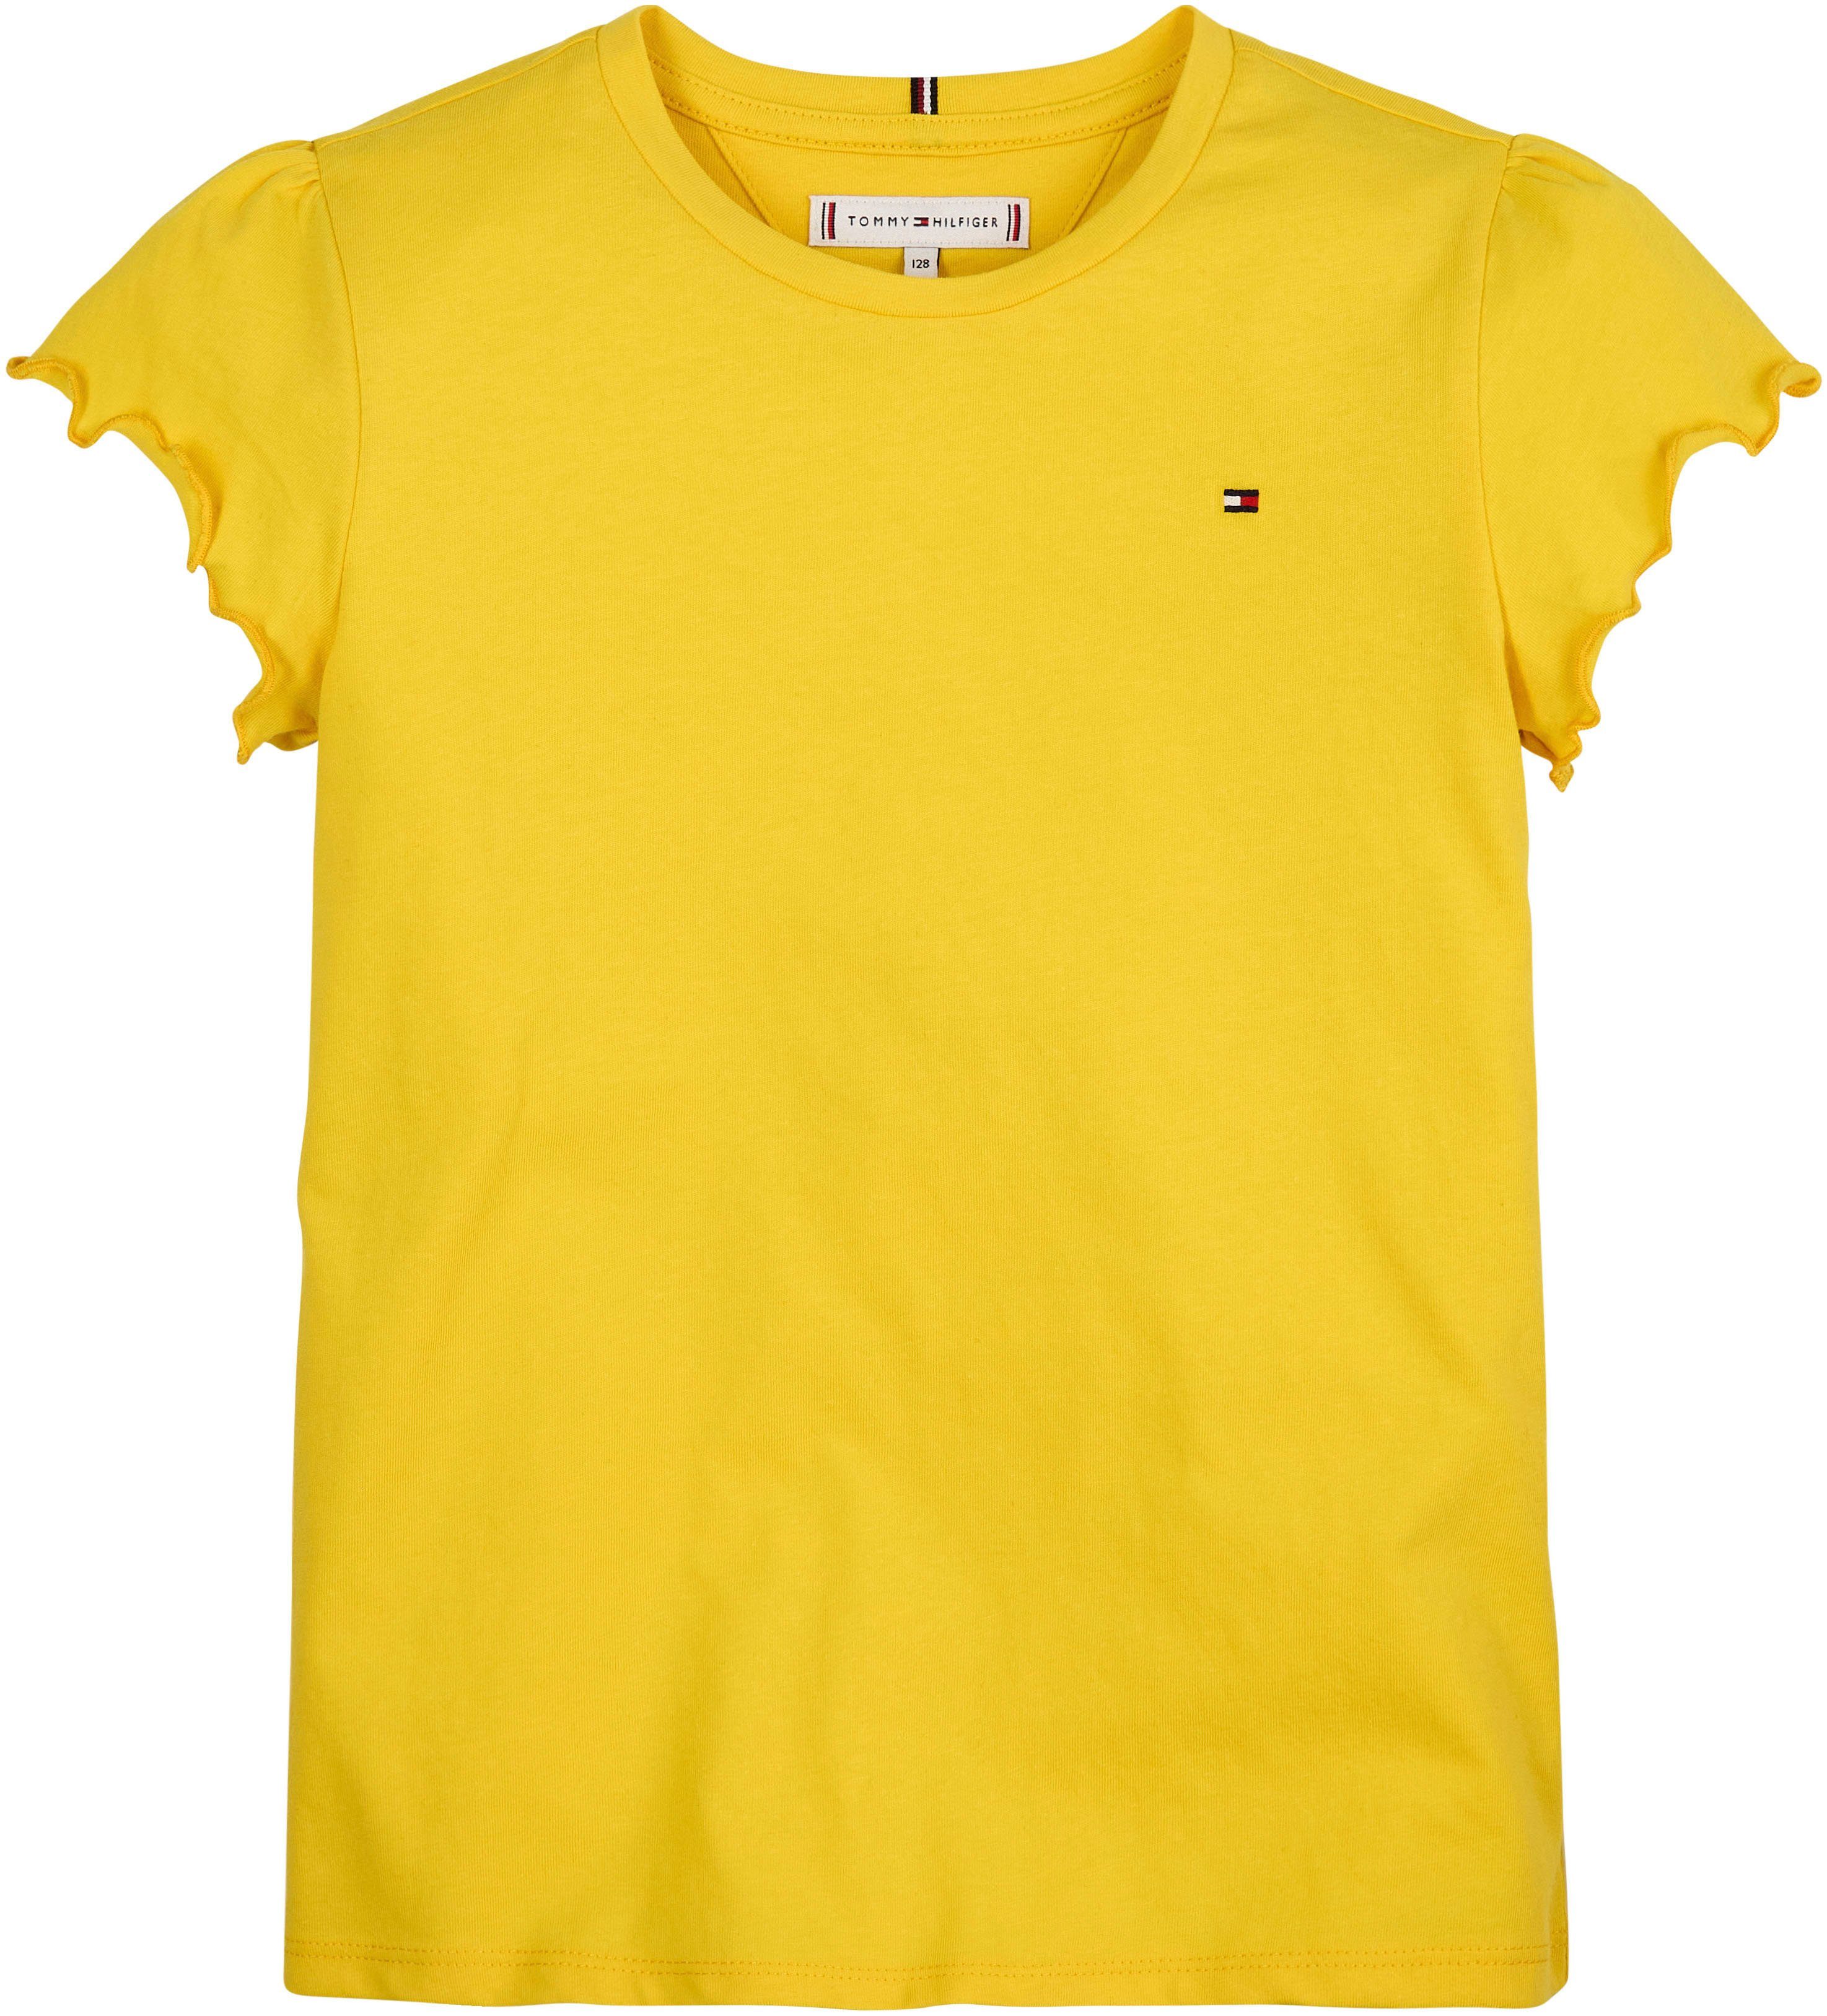 Babys TOP ESSENTIAL Star_Fruit_Yellow RUFFLE T-Shirt Tommy Hilfiger SLEEVE für